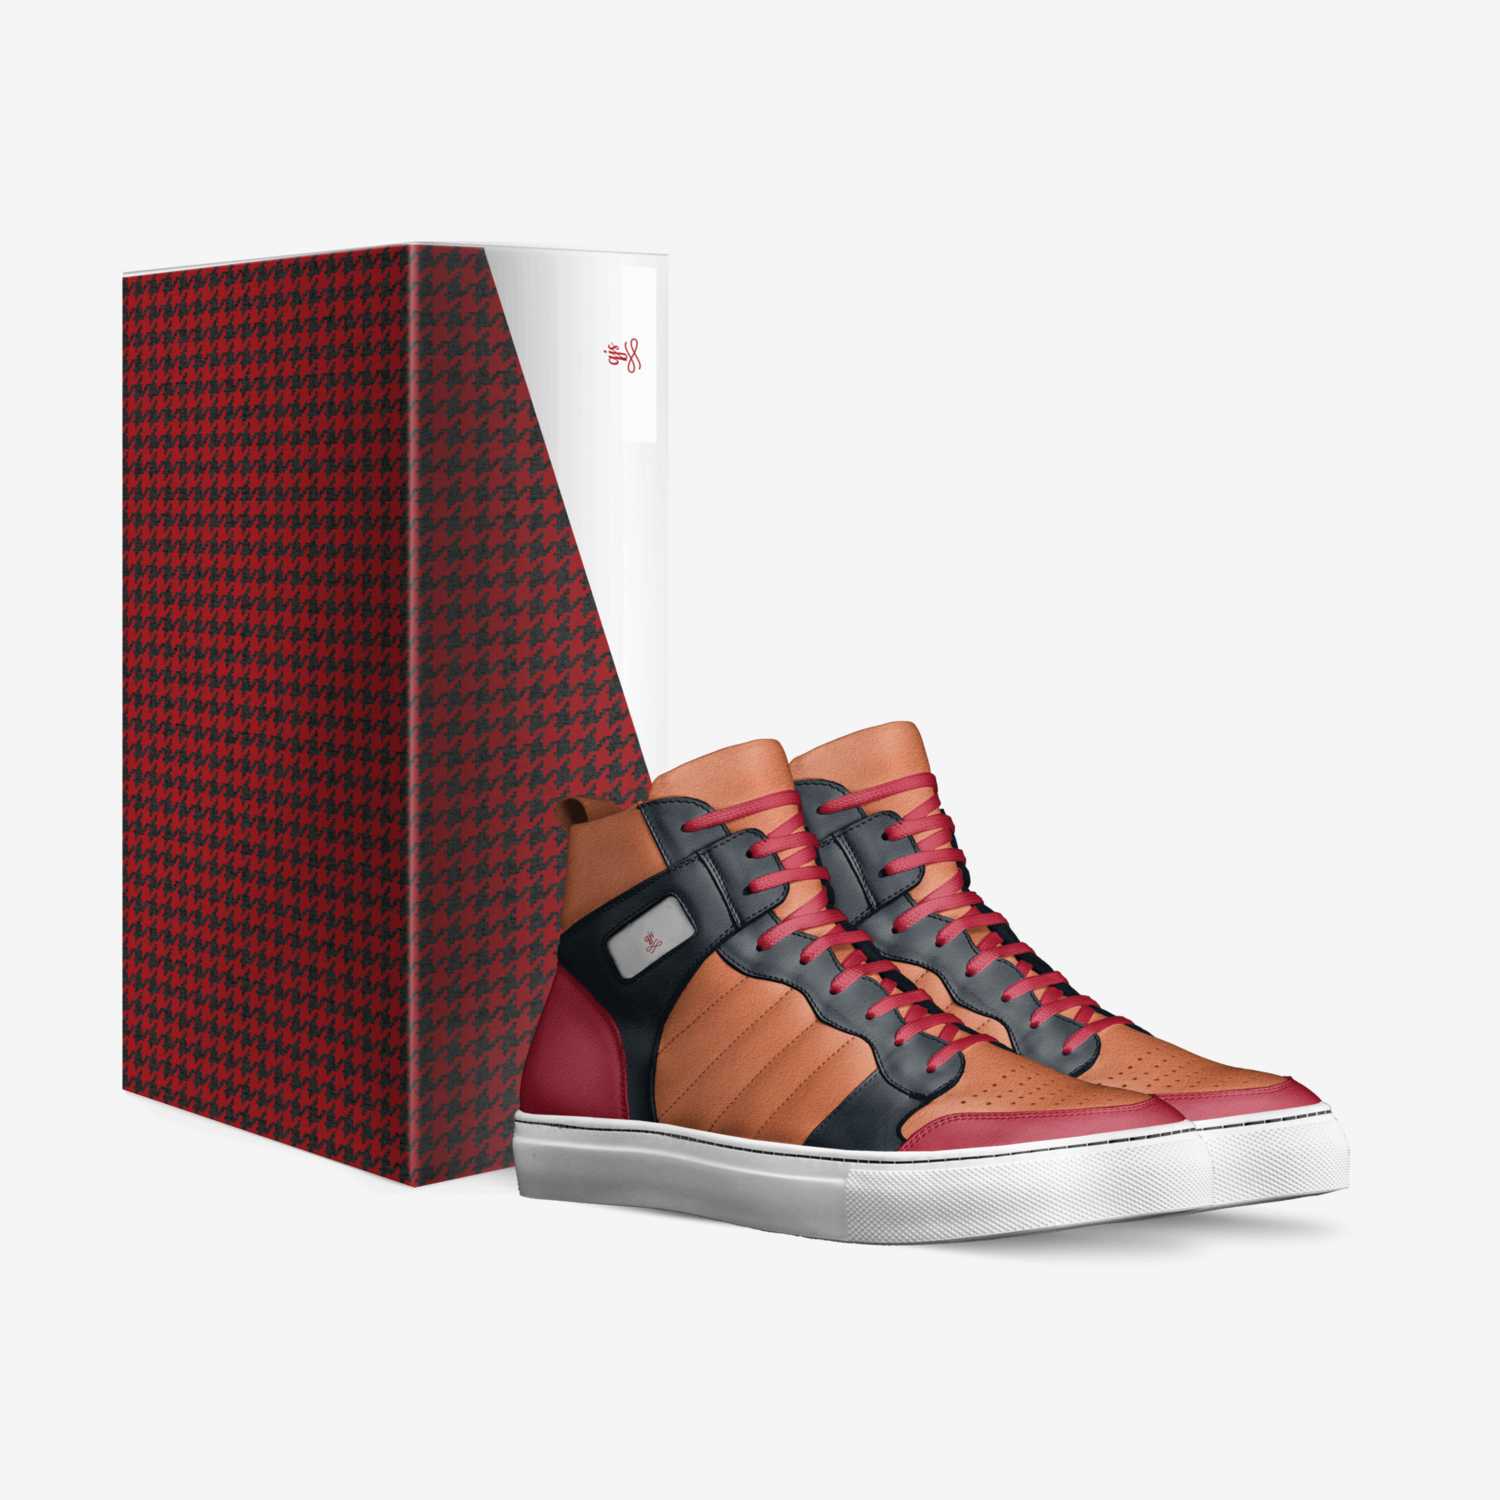 qjs custom made in Italy shoes by Qadiz Johnson | Box view